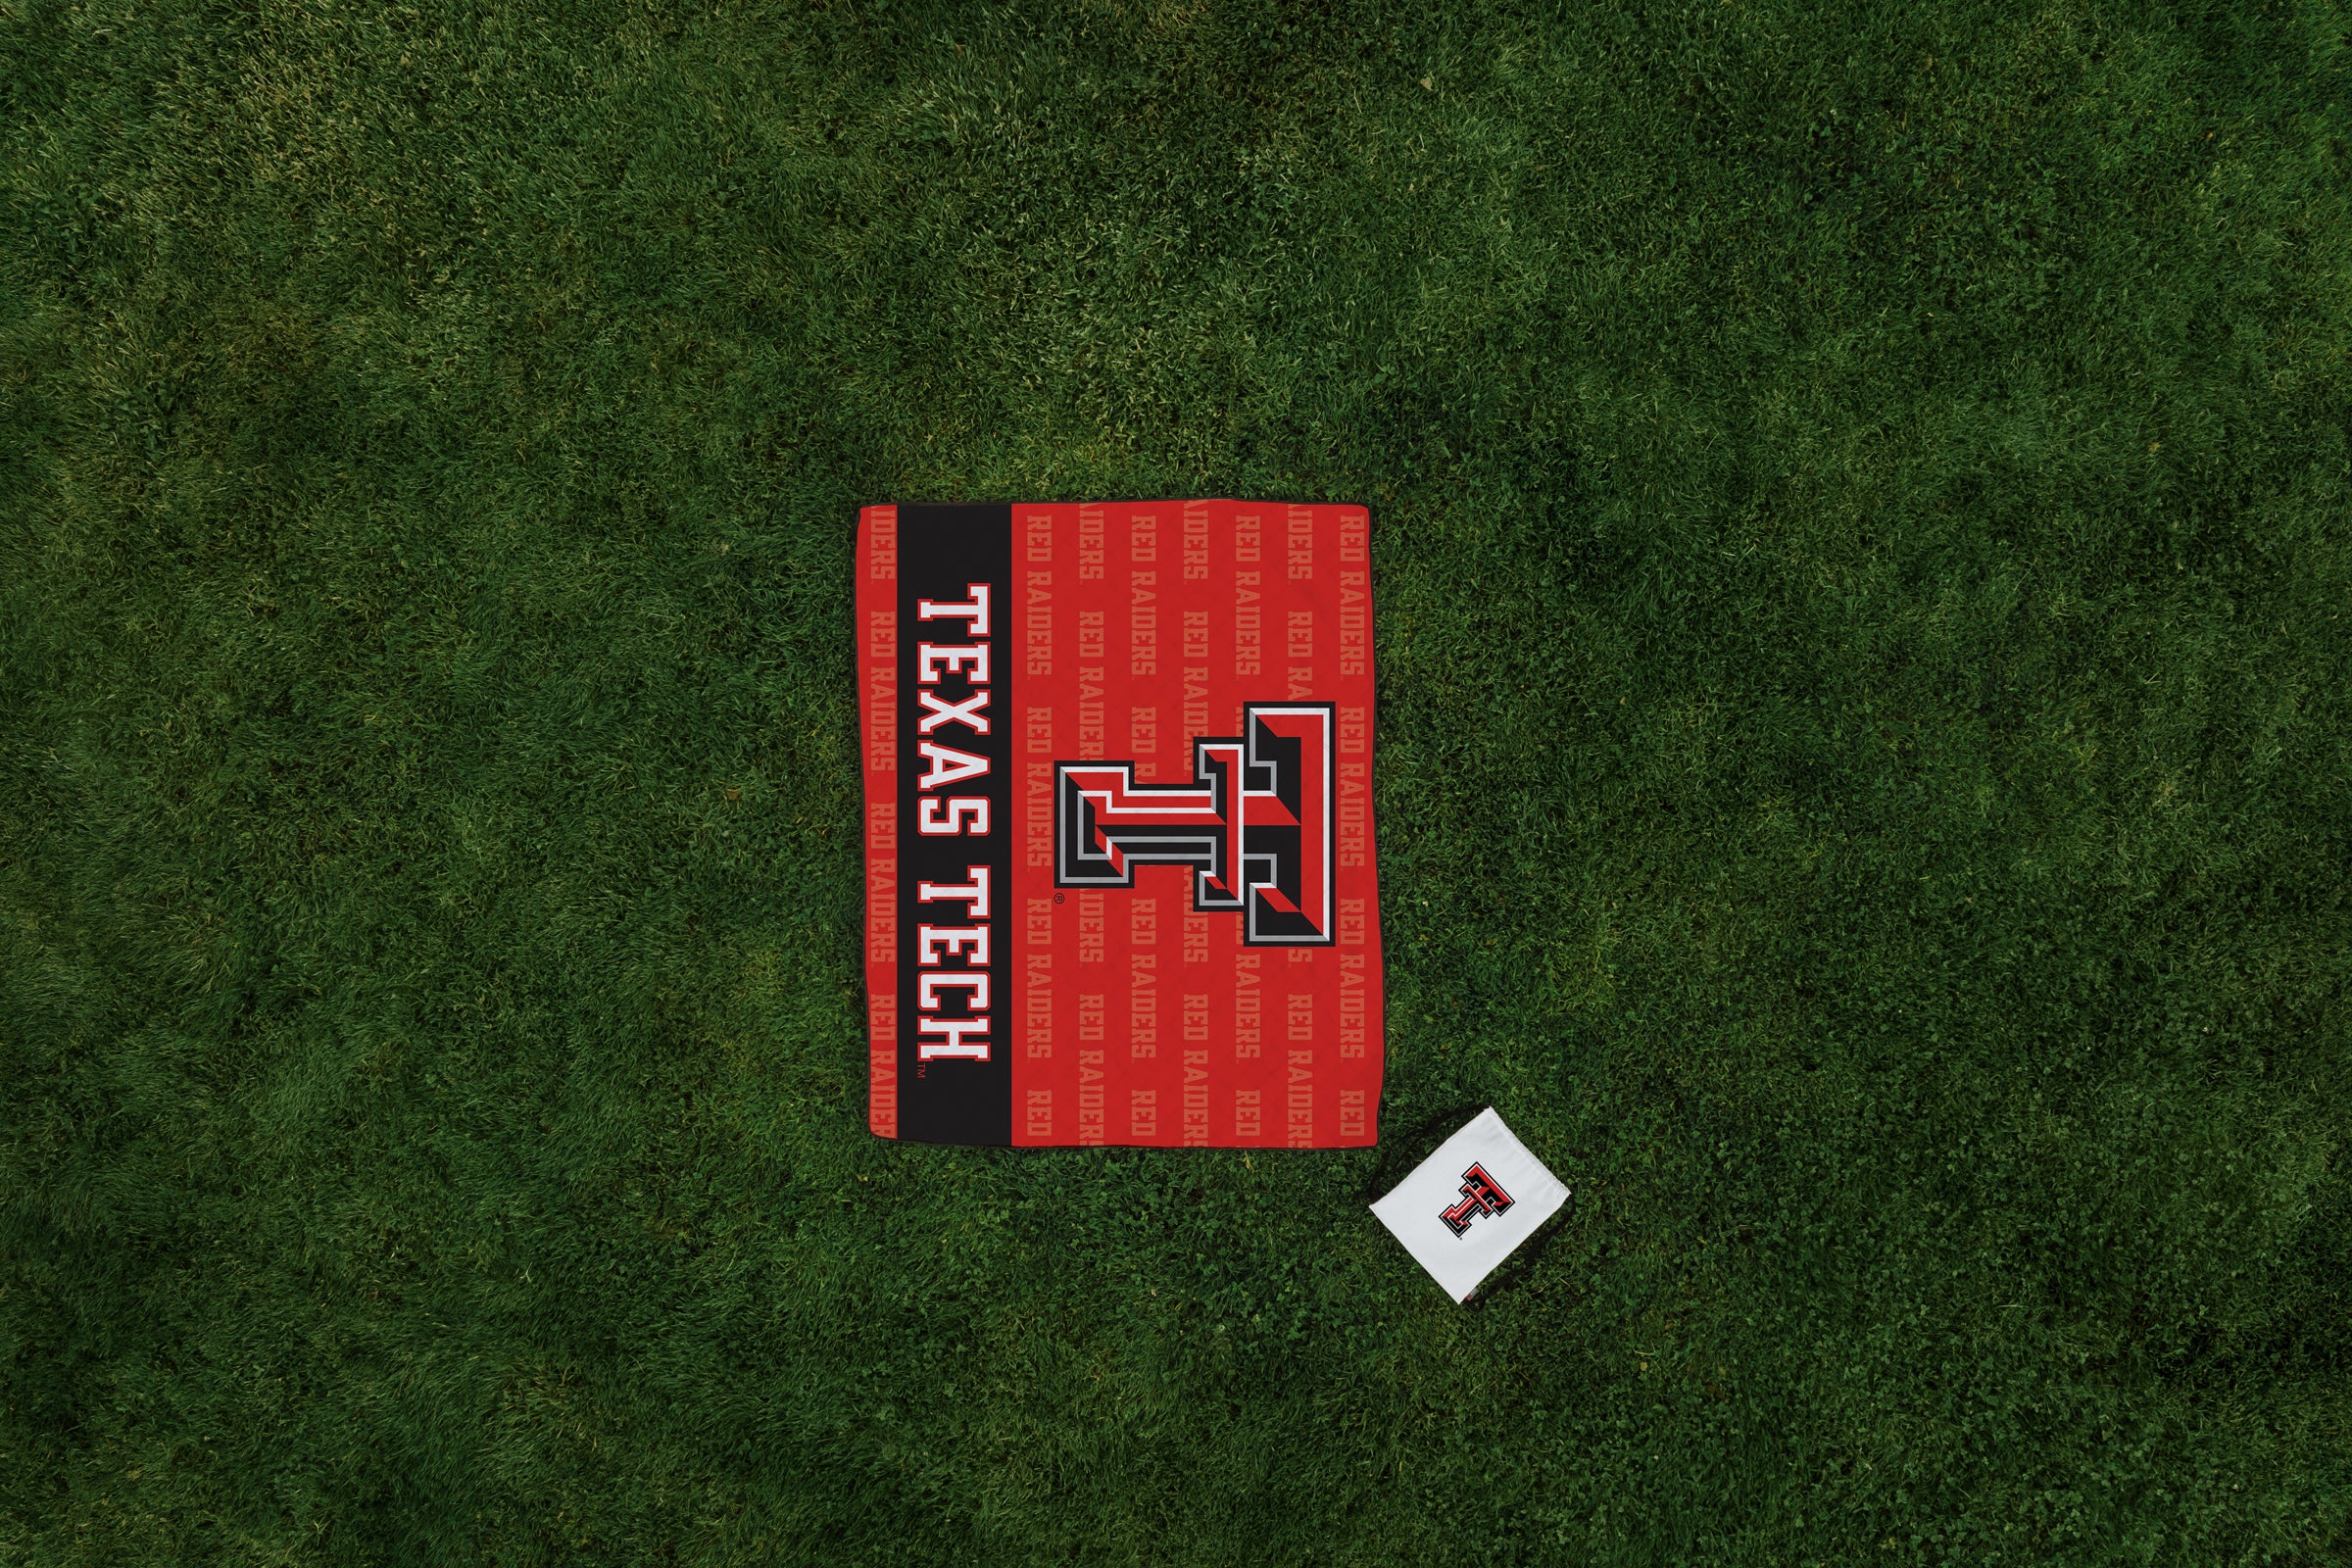 Texas Tech Red Raiders - Impresa Picnic Blanket